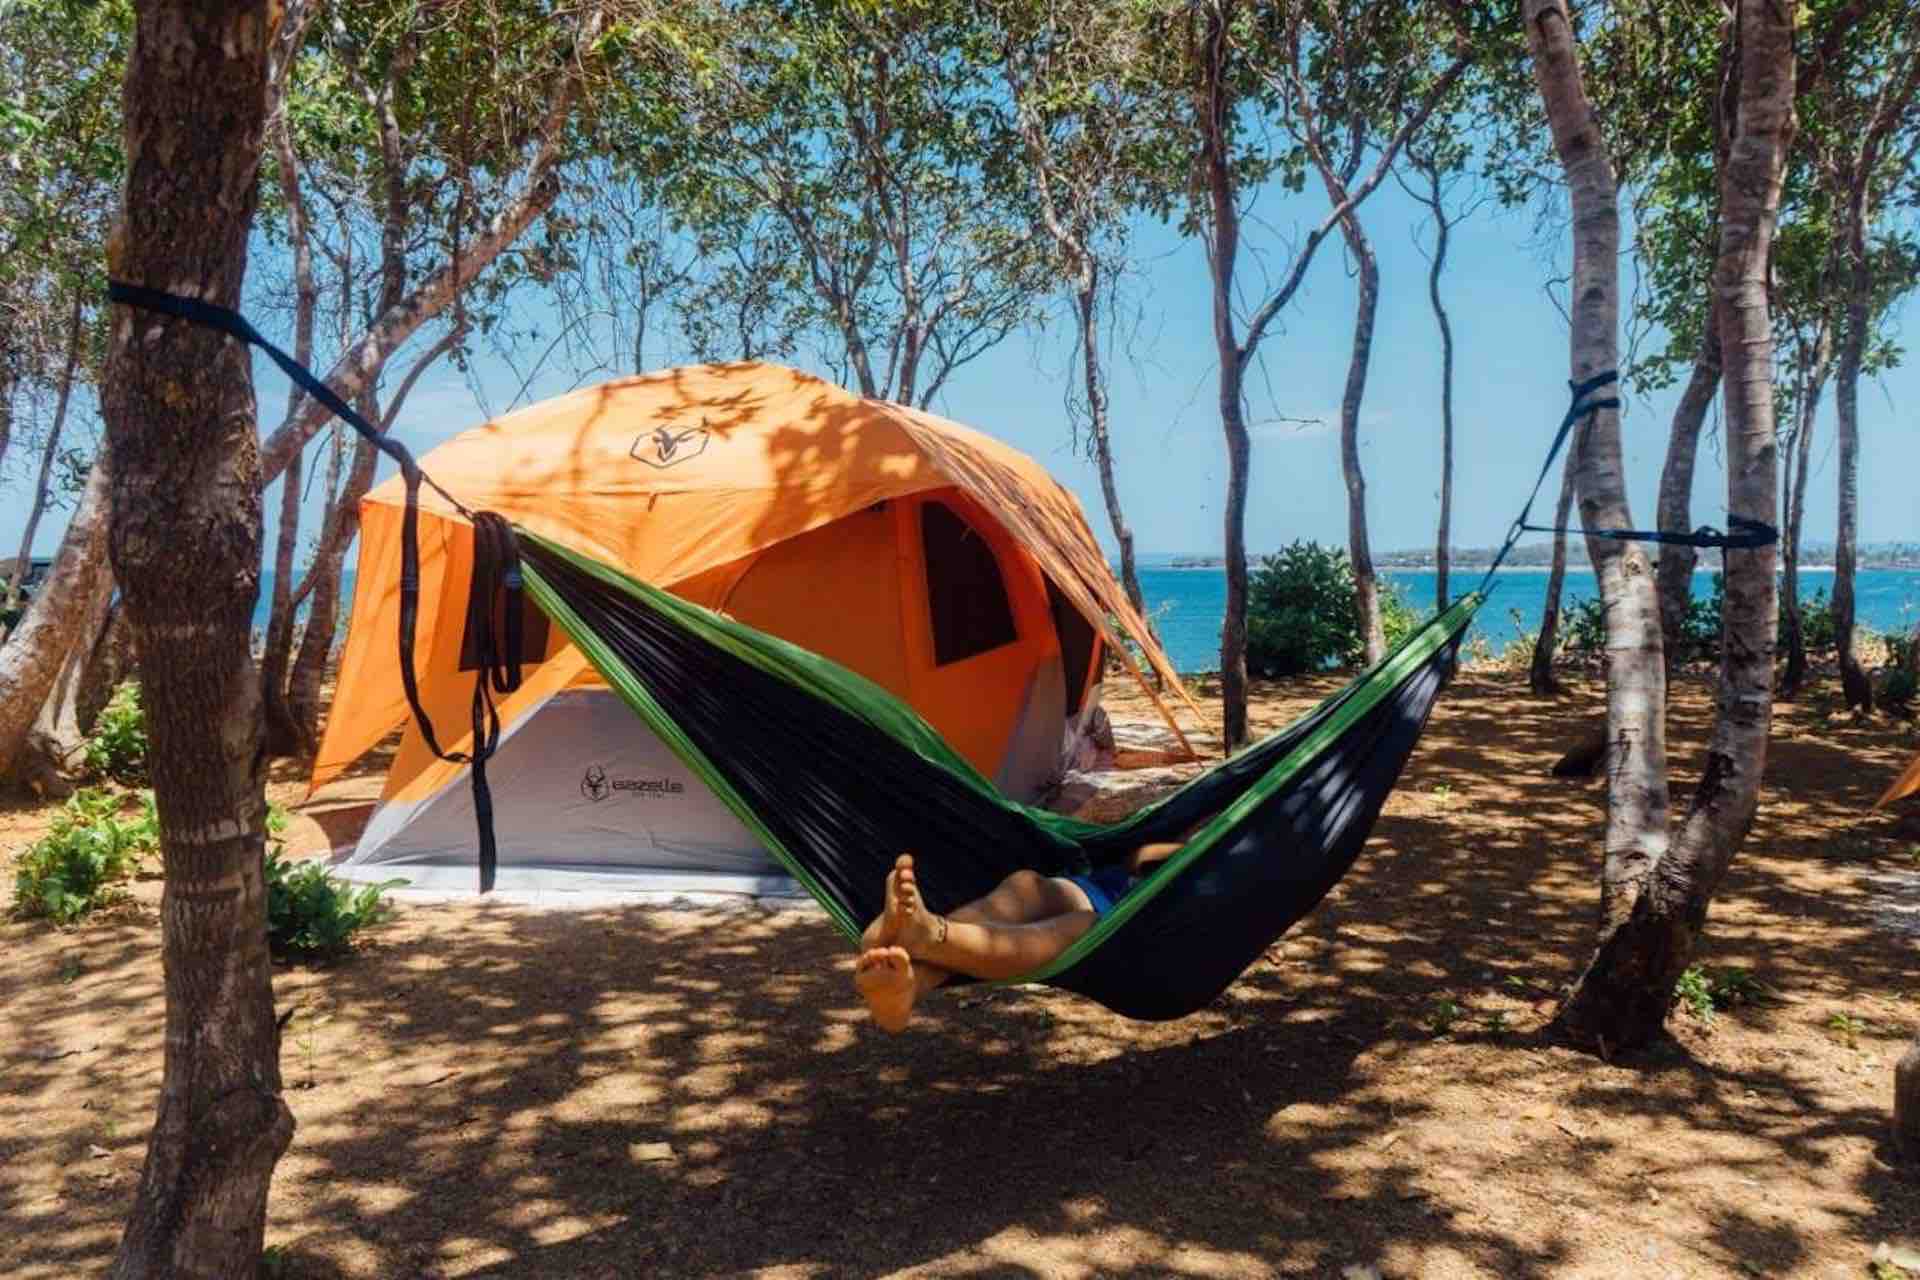 Sonny Island Resort Panama hammock and tent